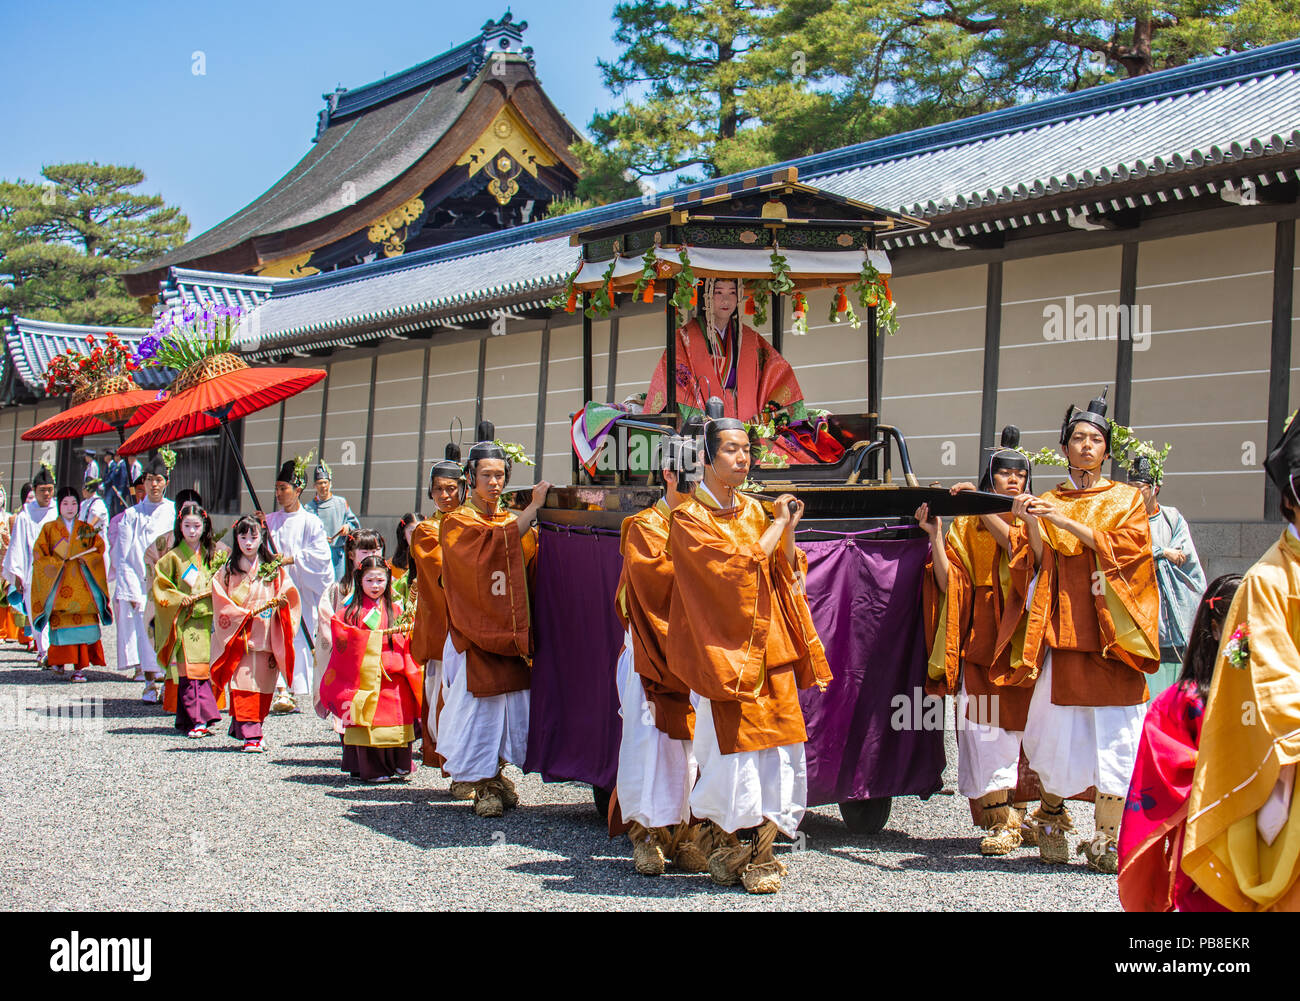 Japan, Kyoto City, Aoi Matsuri ,Festival, Ladies of the Court Parading Stock Photo